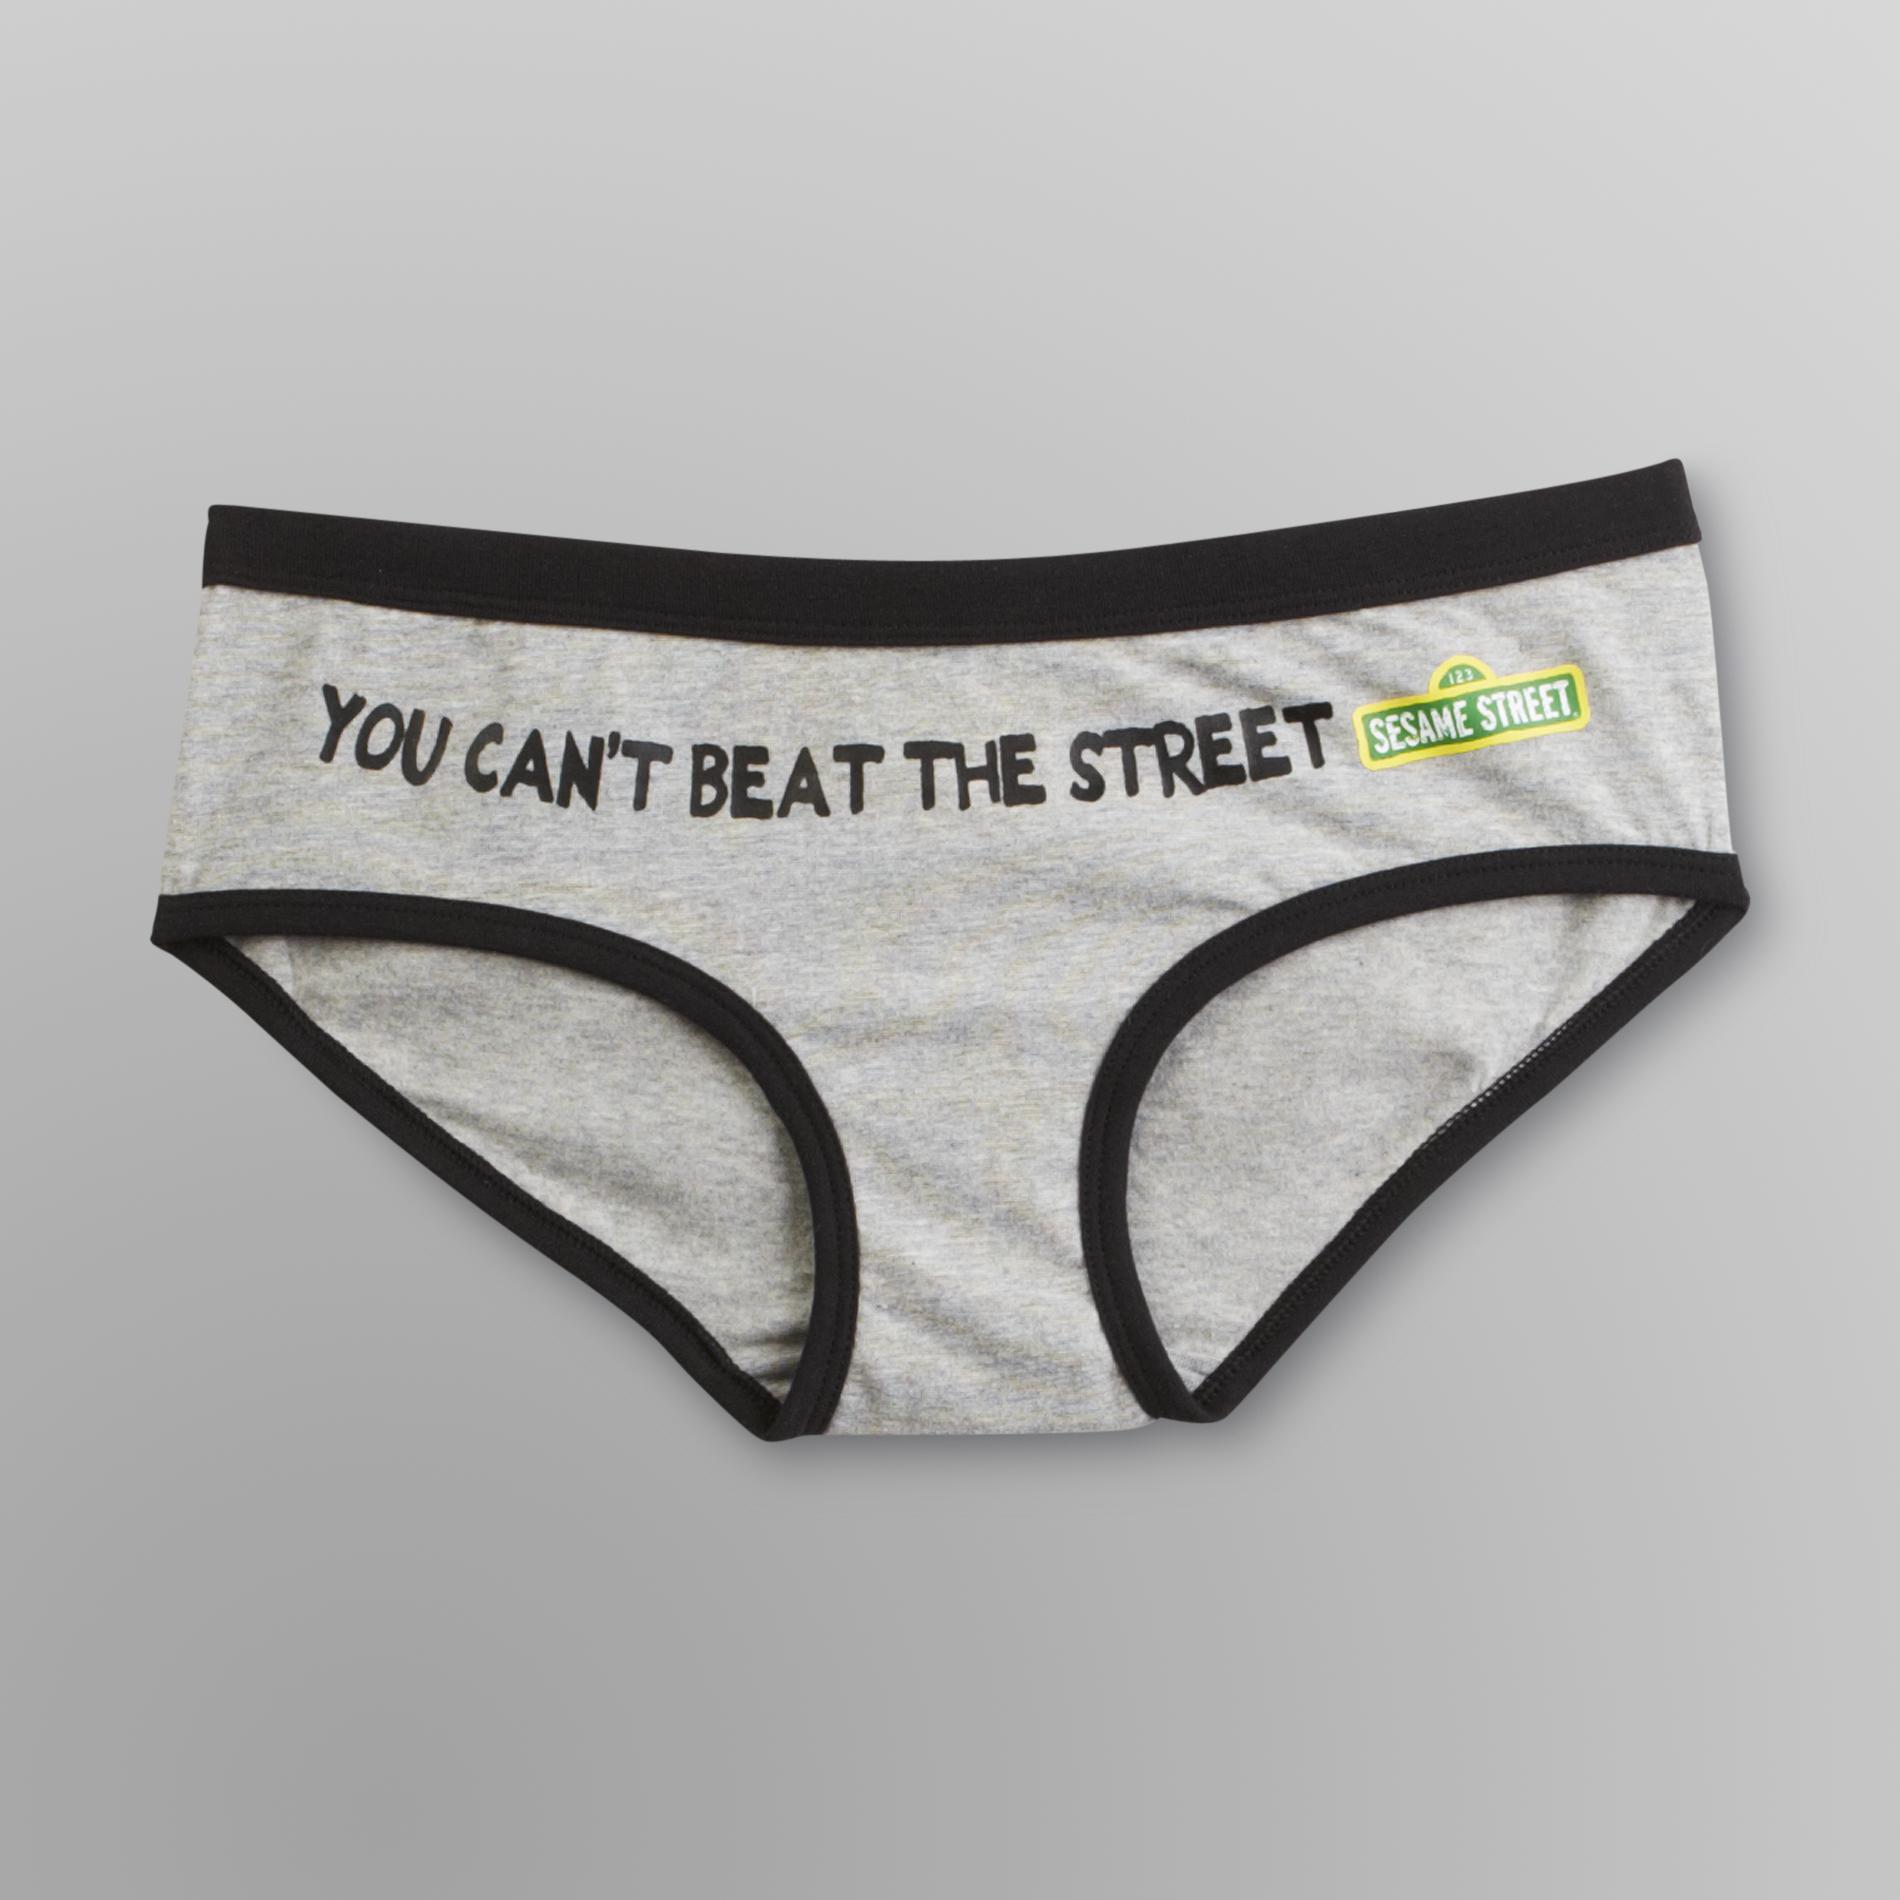 Sesame Street Junior's Hipster Panties - You Can't Beat the Street